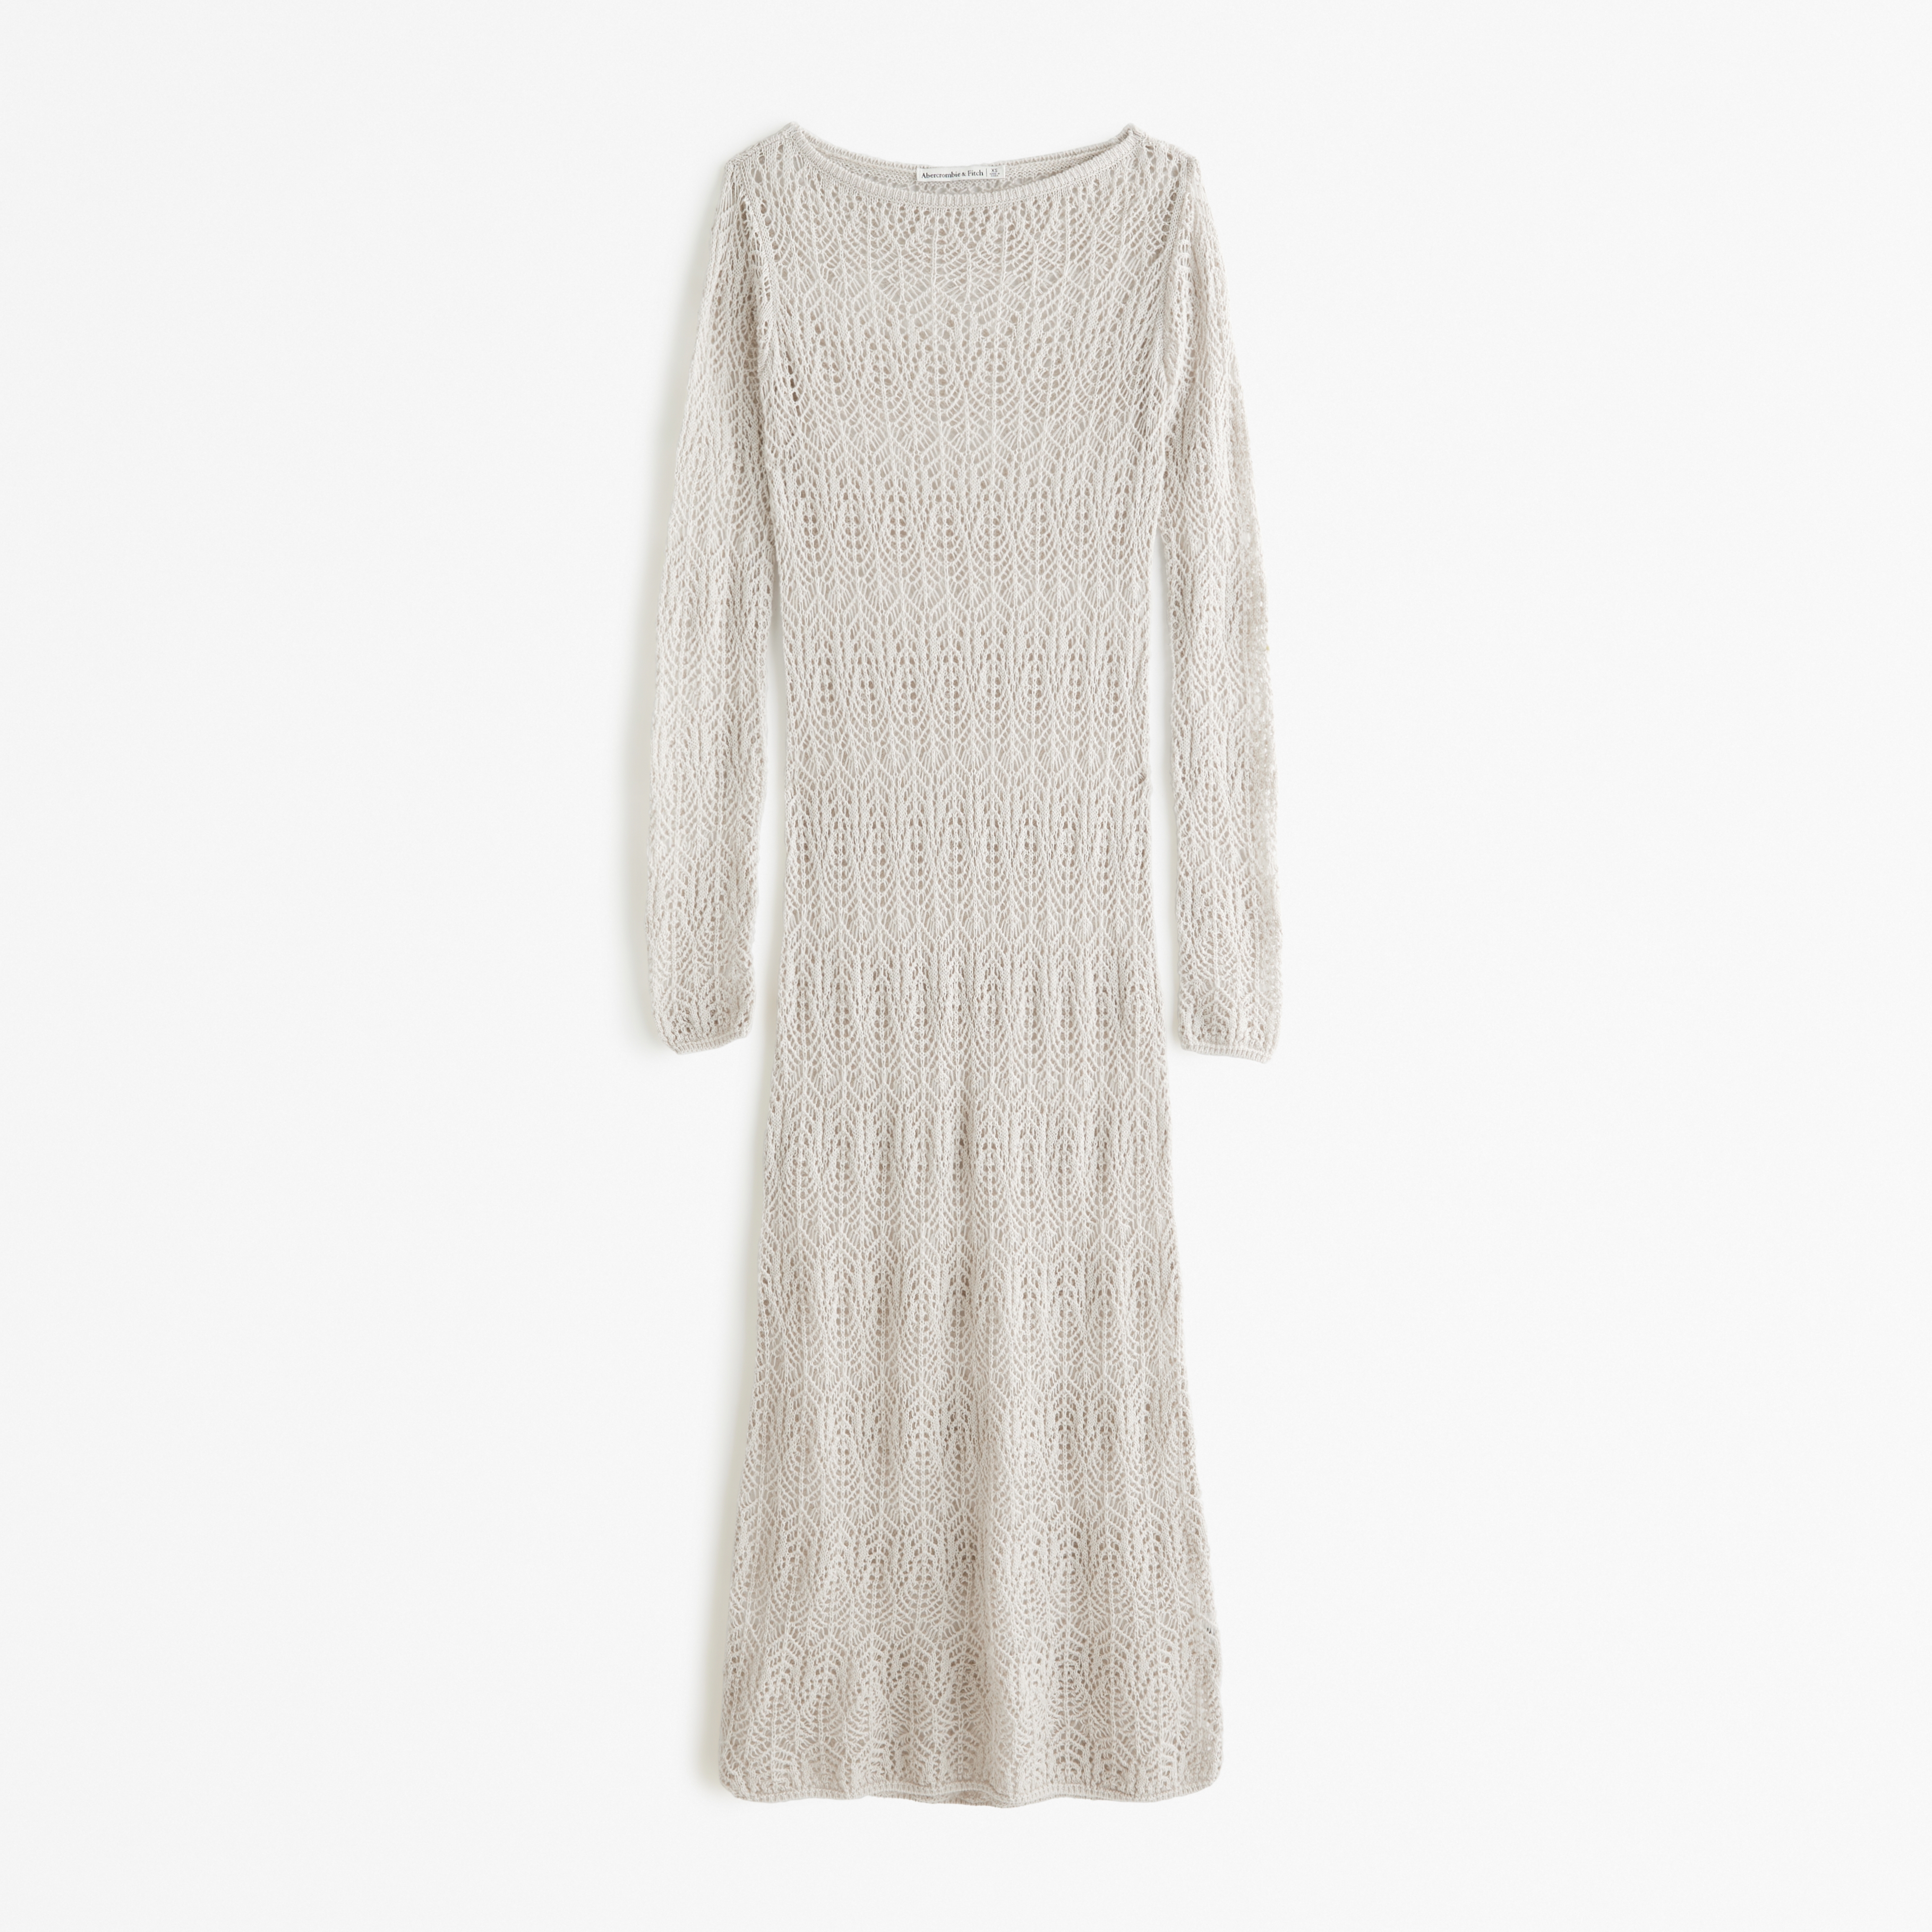 Long-Sleeve Crochet-Style Maxi Dress Coverup